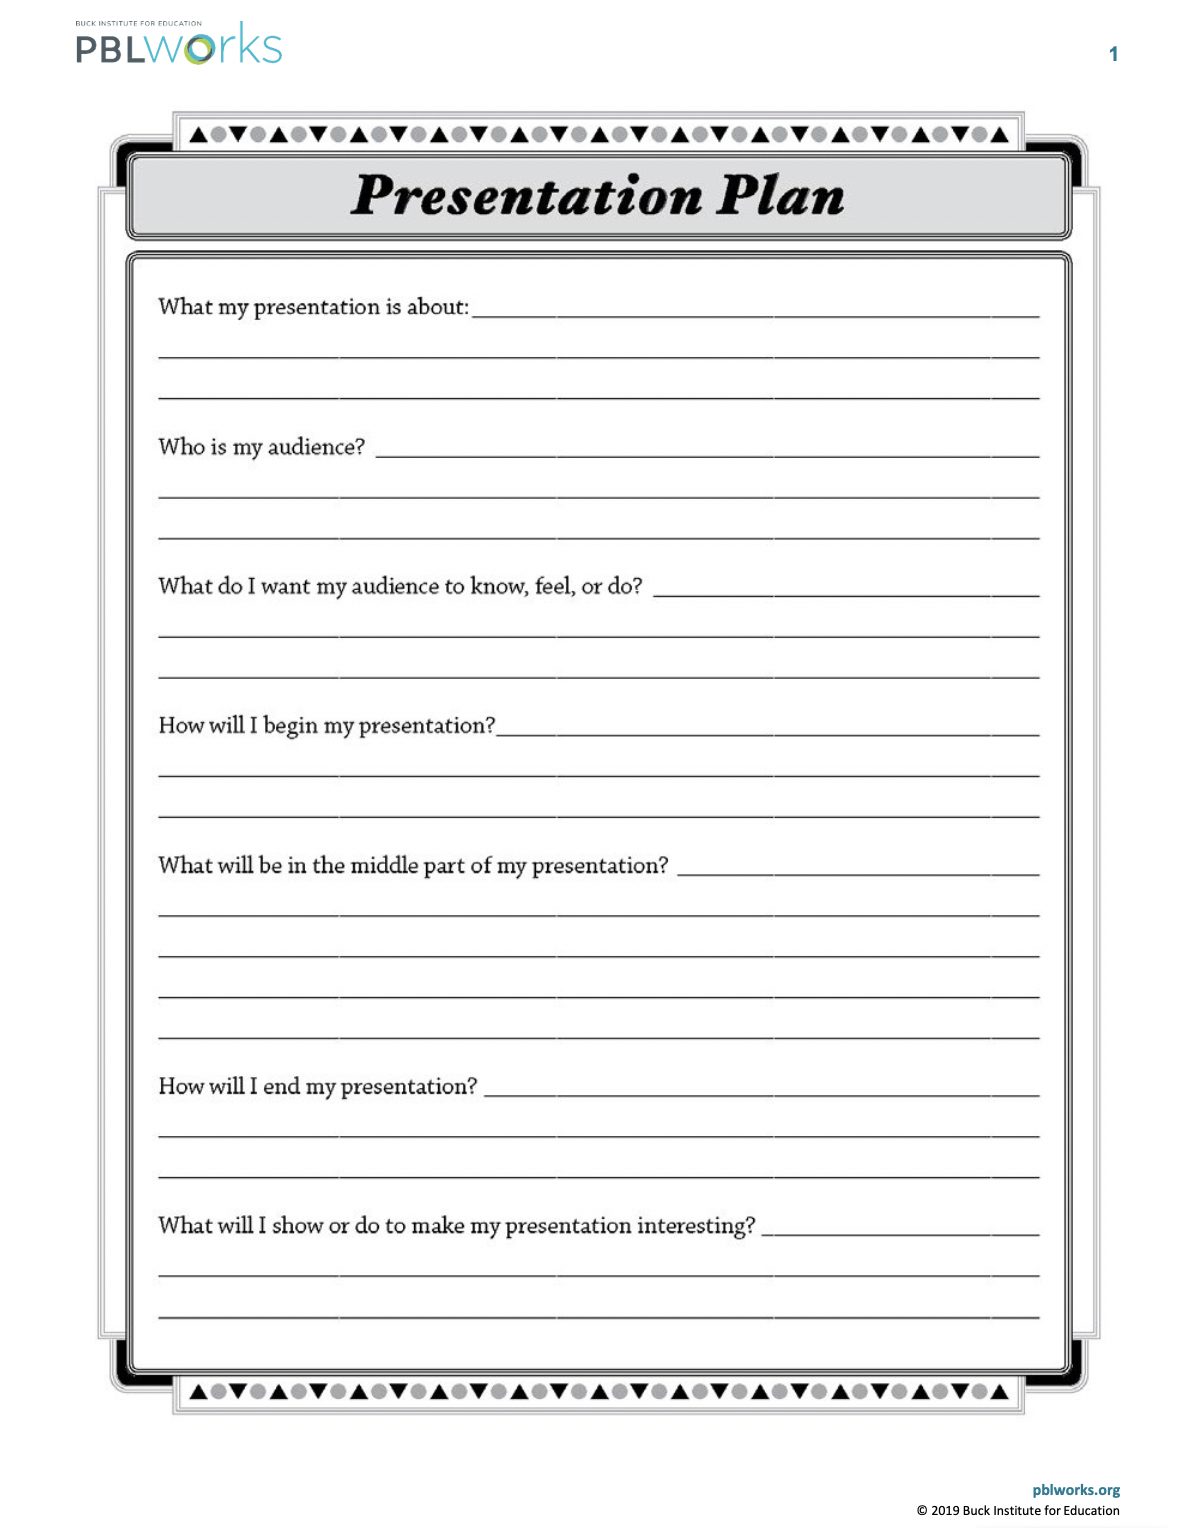 Presentation Plan 